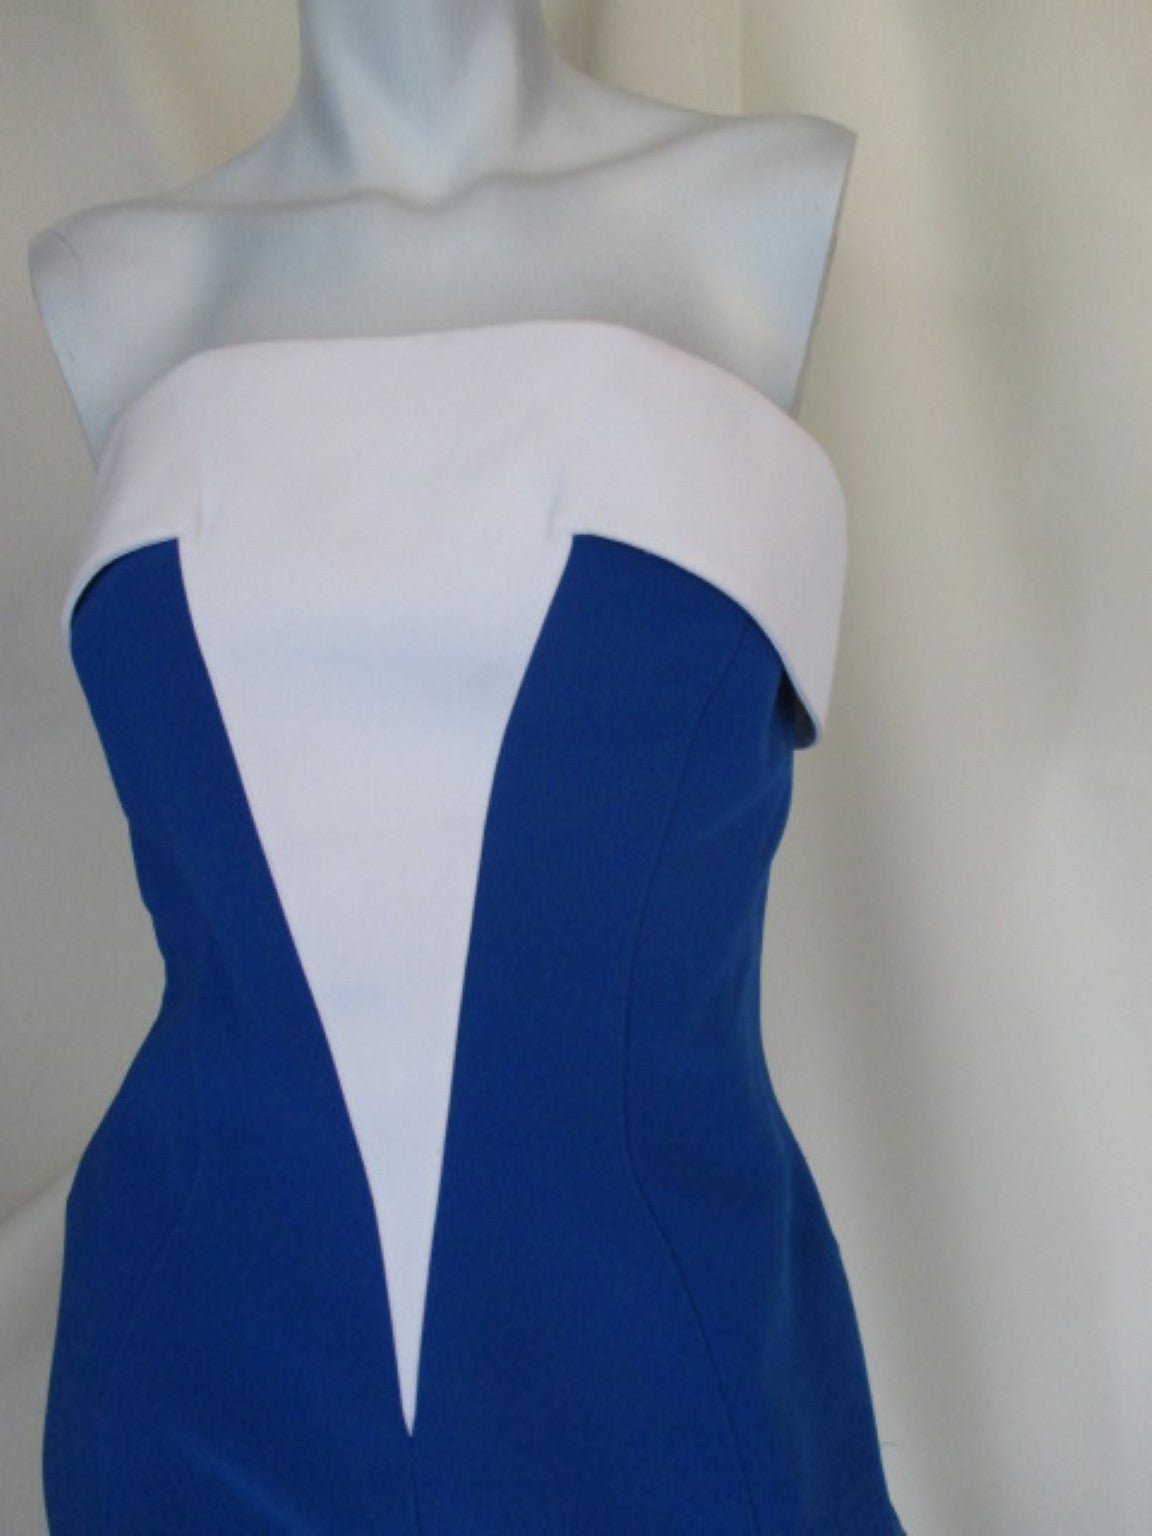 Thierry Mugler edgy party sleeveless dress, color blue & white.
Size france 40 but fits like a eu 36

Measurements:
Length: 77 cm
Bust:  66 cm
Waist: 70 cm
Hips:  90 cm